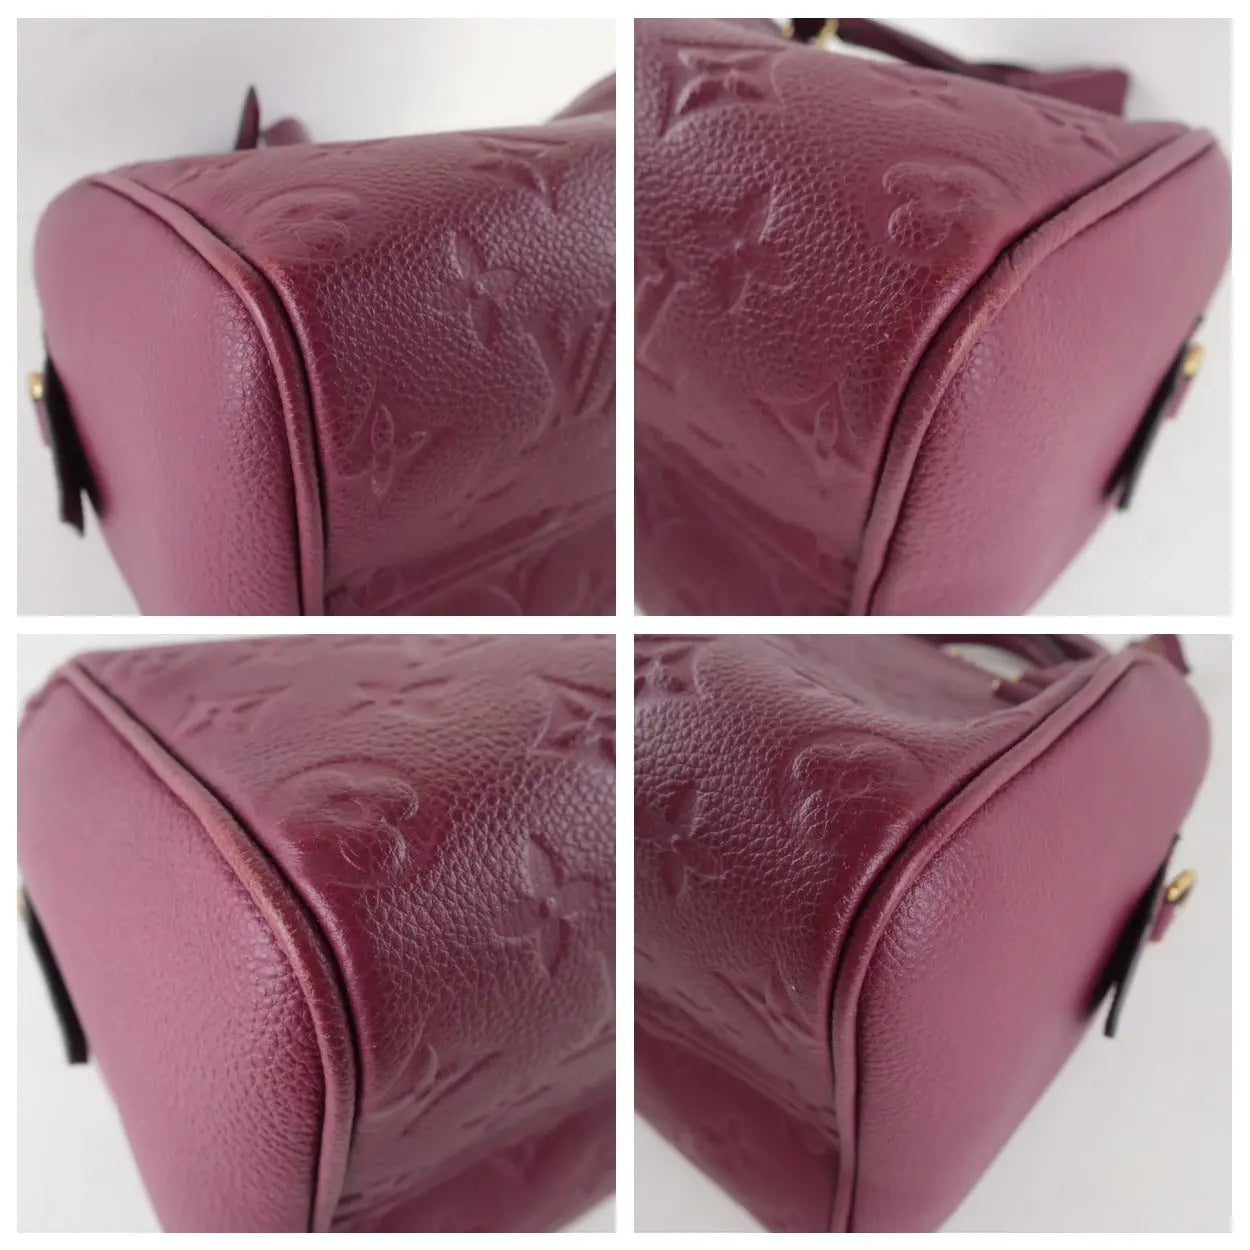 Louis Vuitton Aurore Monogram Empreinte Leather Speedy 25 Bandouliere Bag